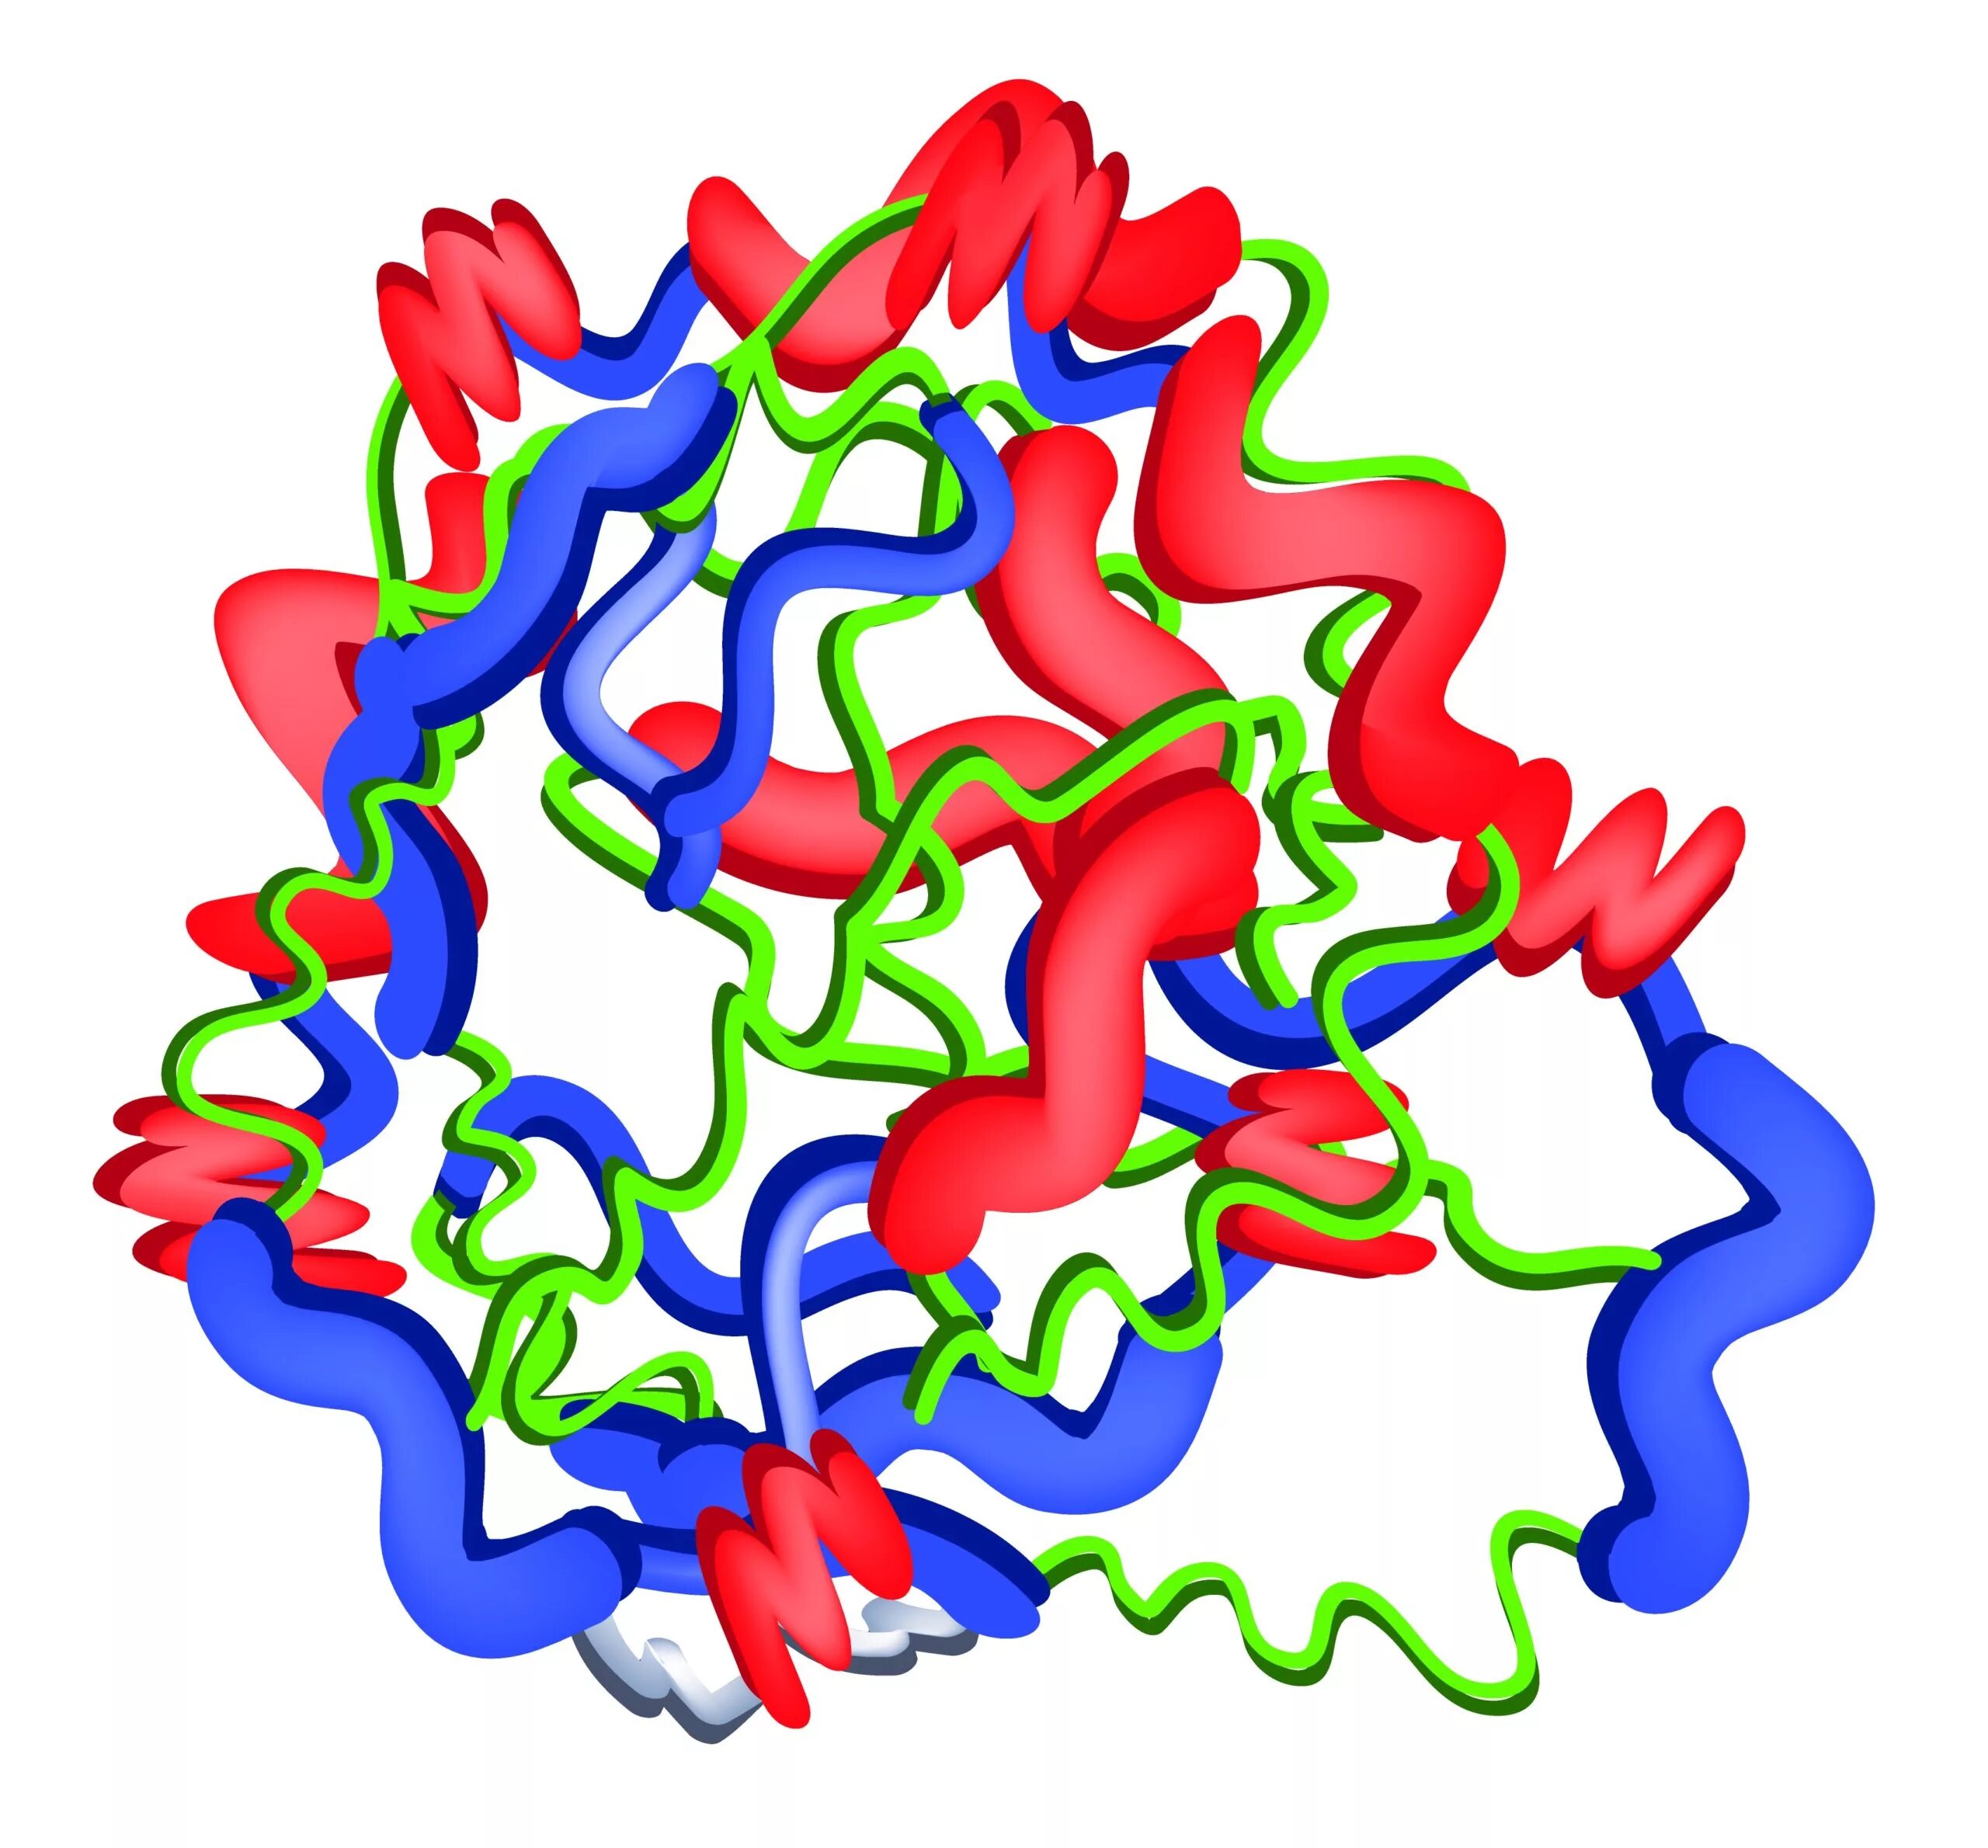 Пепсин фермент. Пепсин структура белка. Пепсин 3b. Фермент пепсин строение. Вырабатывает фермент пепсин